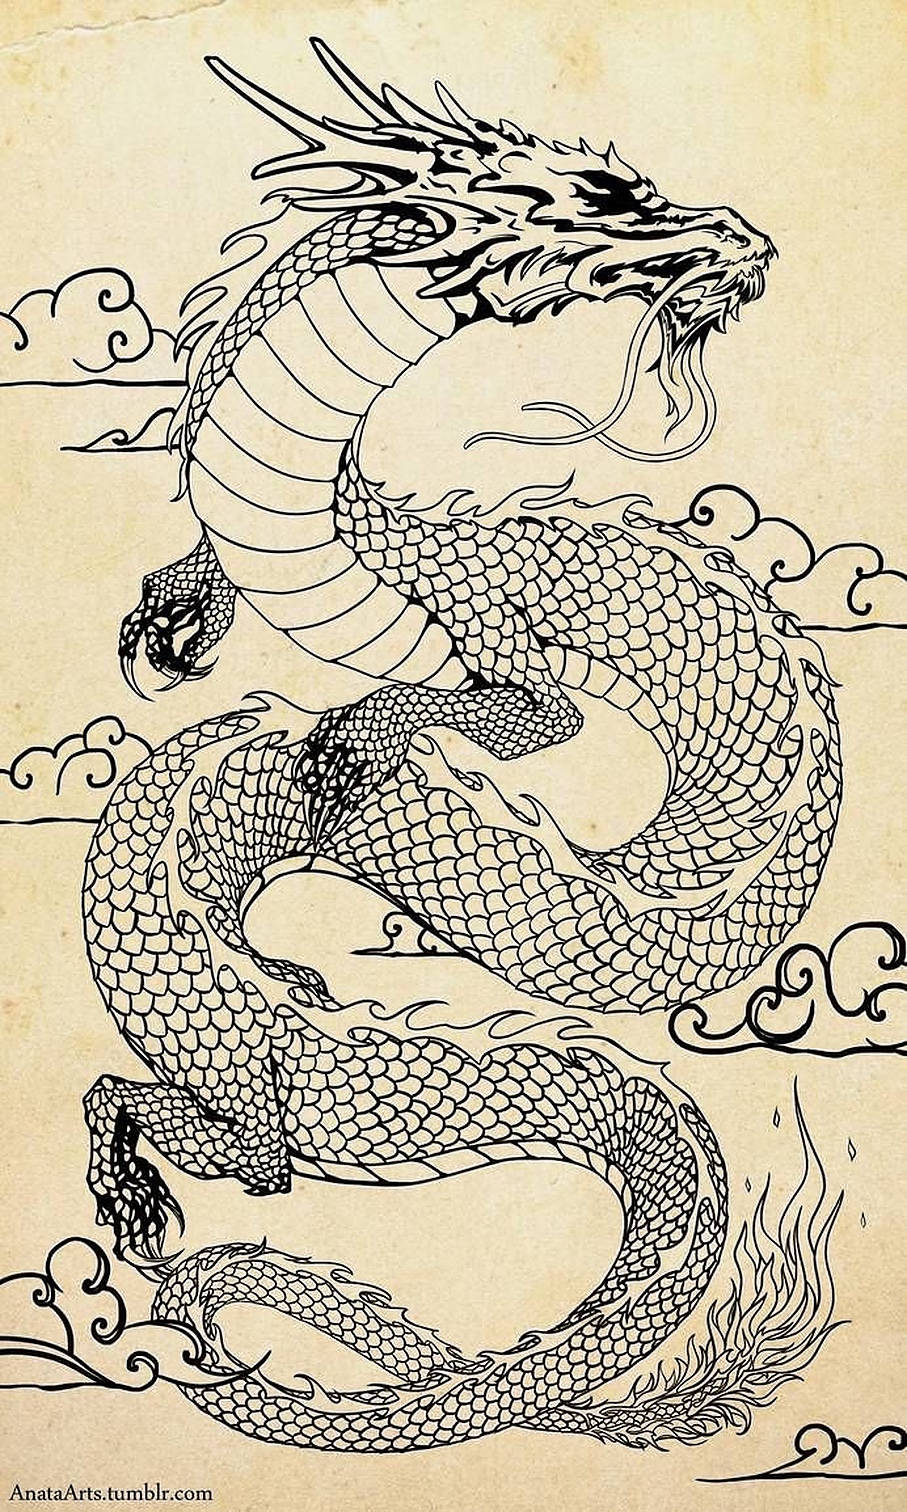 Nagaのおすすめ画像 287 件  Pinterest  Japanese dragon tattoos Koi dragon tattoo  Japanese tattoo art